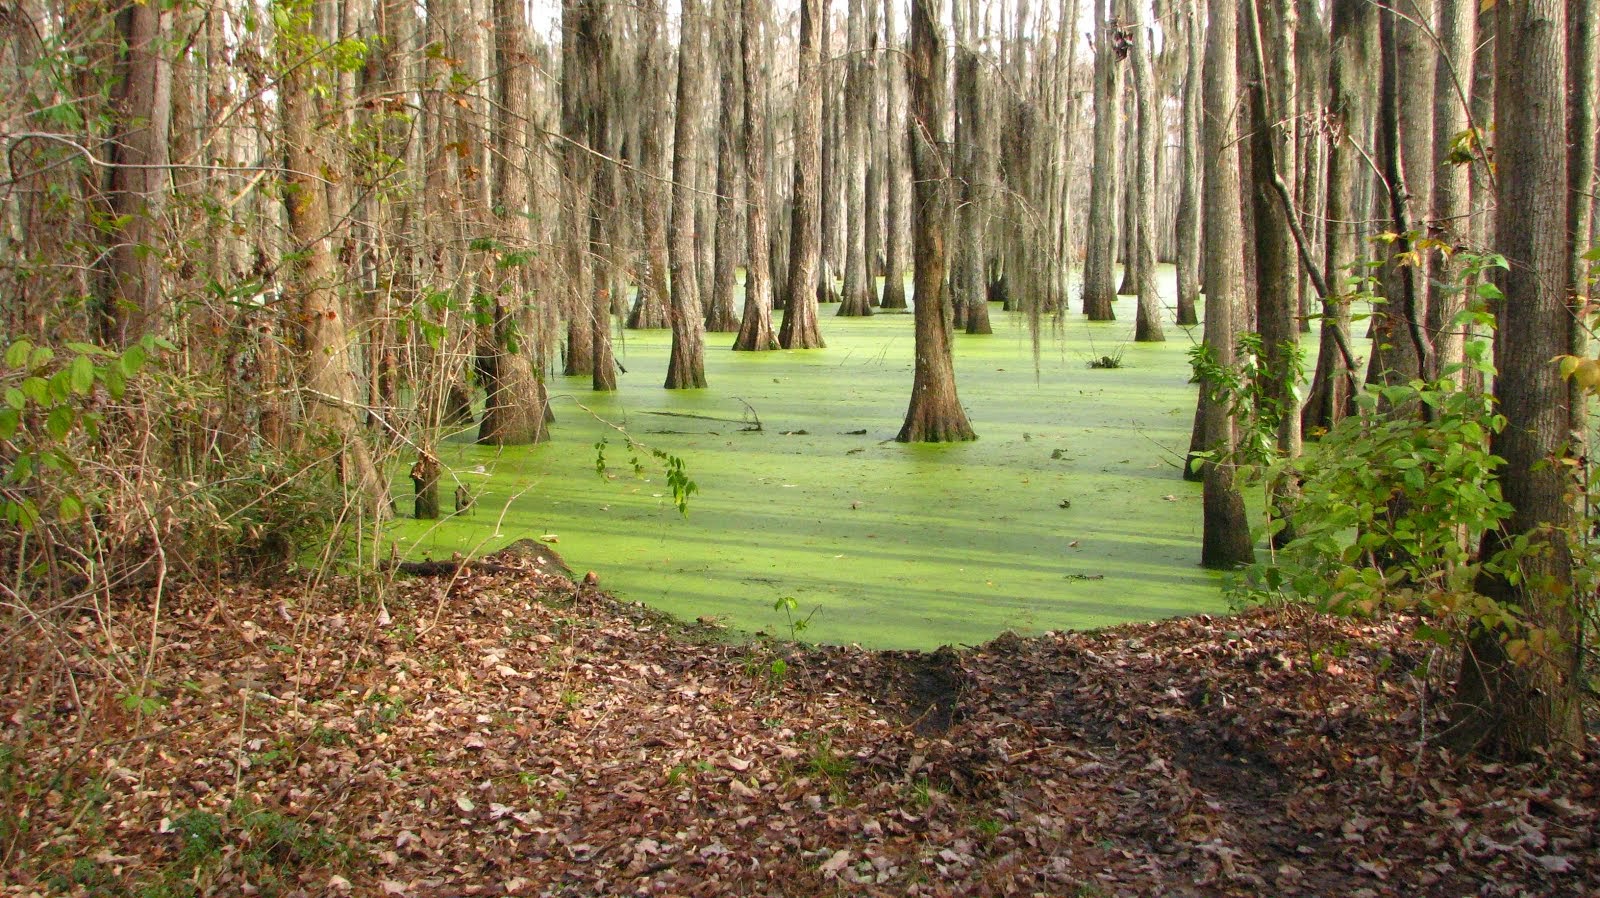 Halfway Swamp, Rimini, South Carolina BEFORE THE FLOOD OF 2015